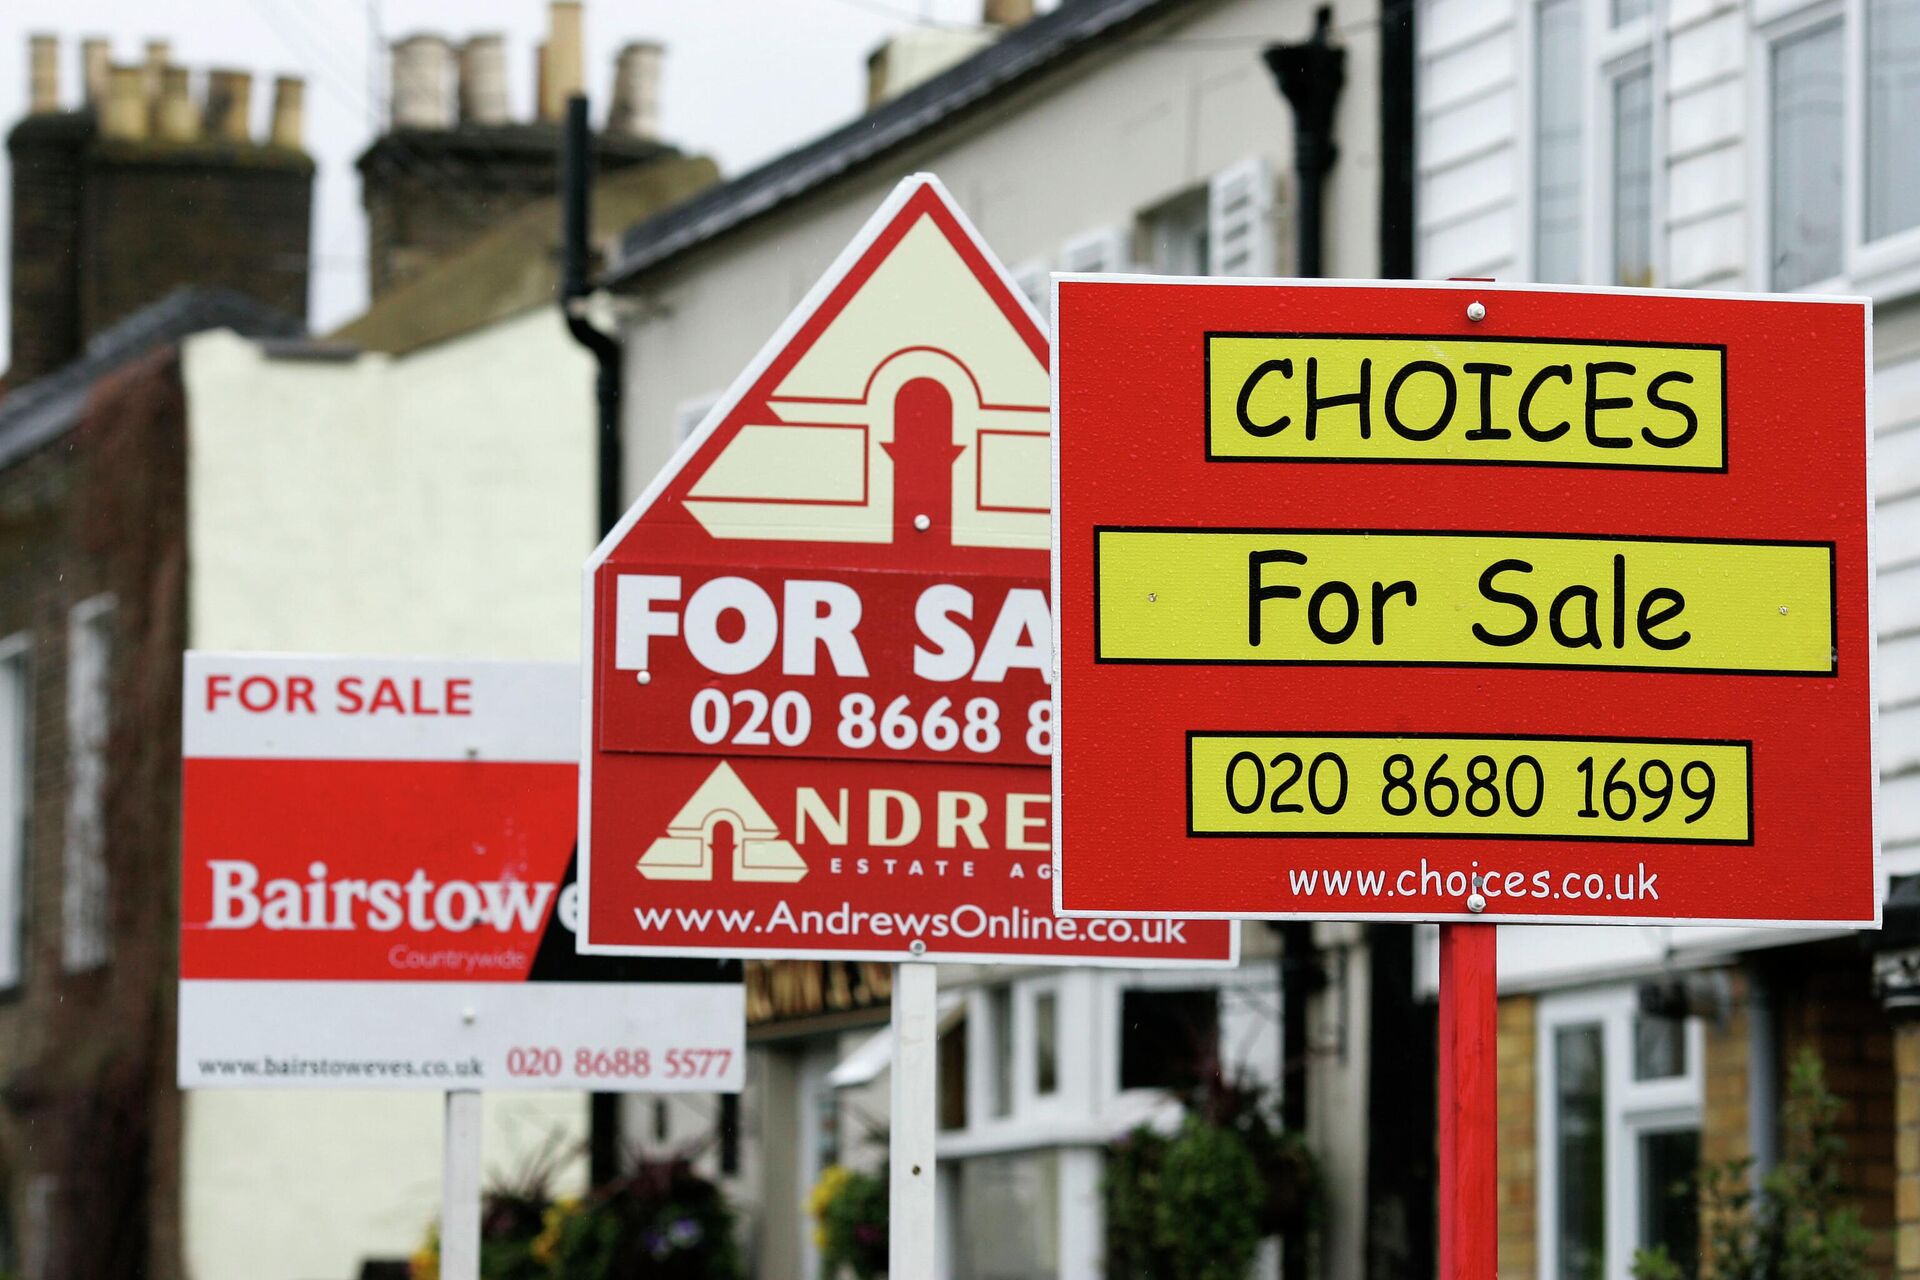 Property for sale signs are seen on a street in Croydon, south London - Sputnik International, 1920, 16.11.2022